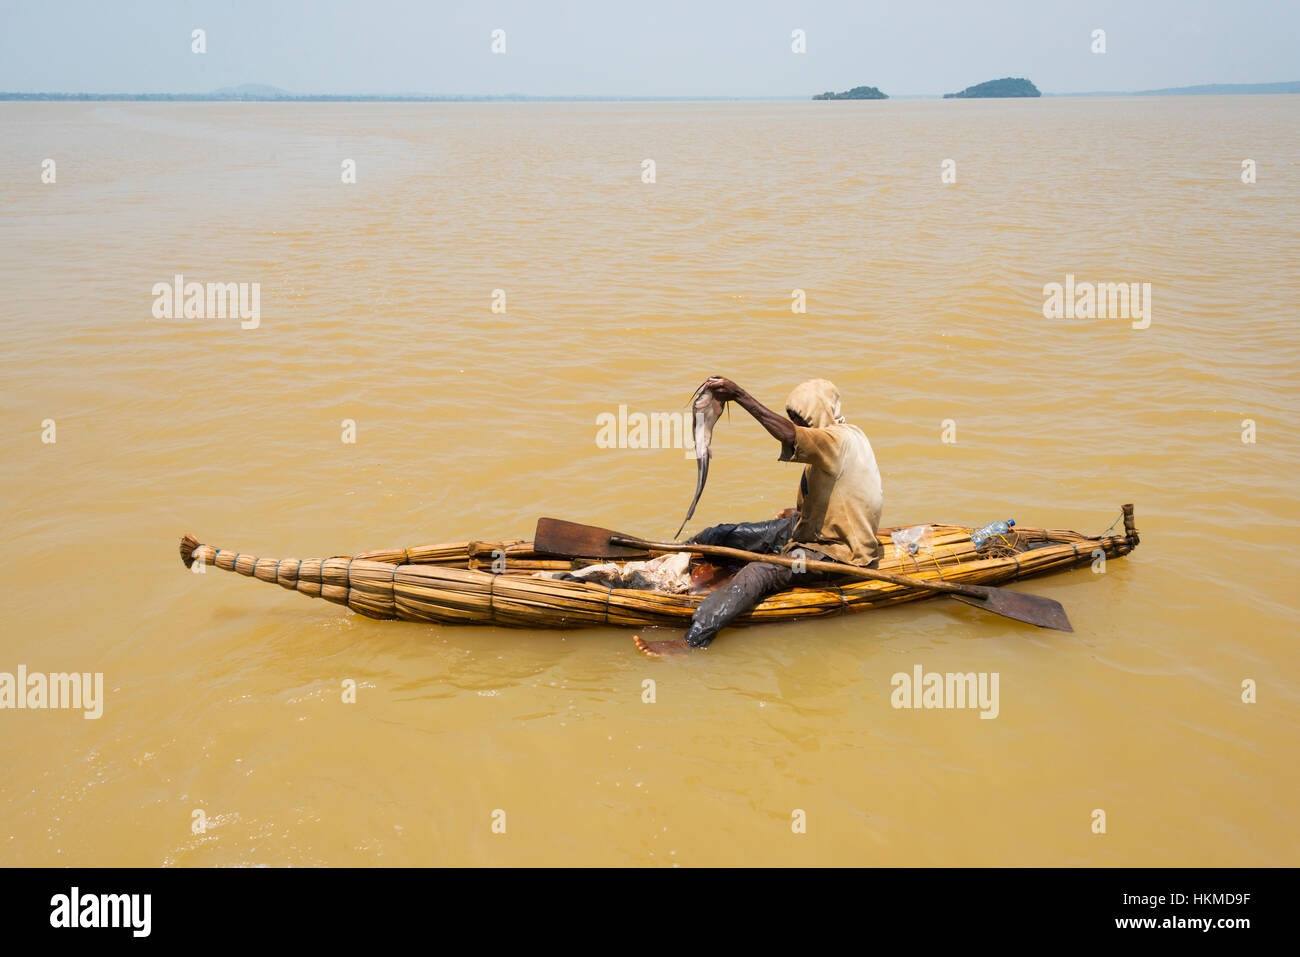 Fisherman on canoe made of papyrus plant, Lake Tana, Bahir Dar, Ethiopia Stock Photo